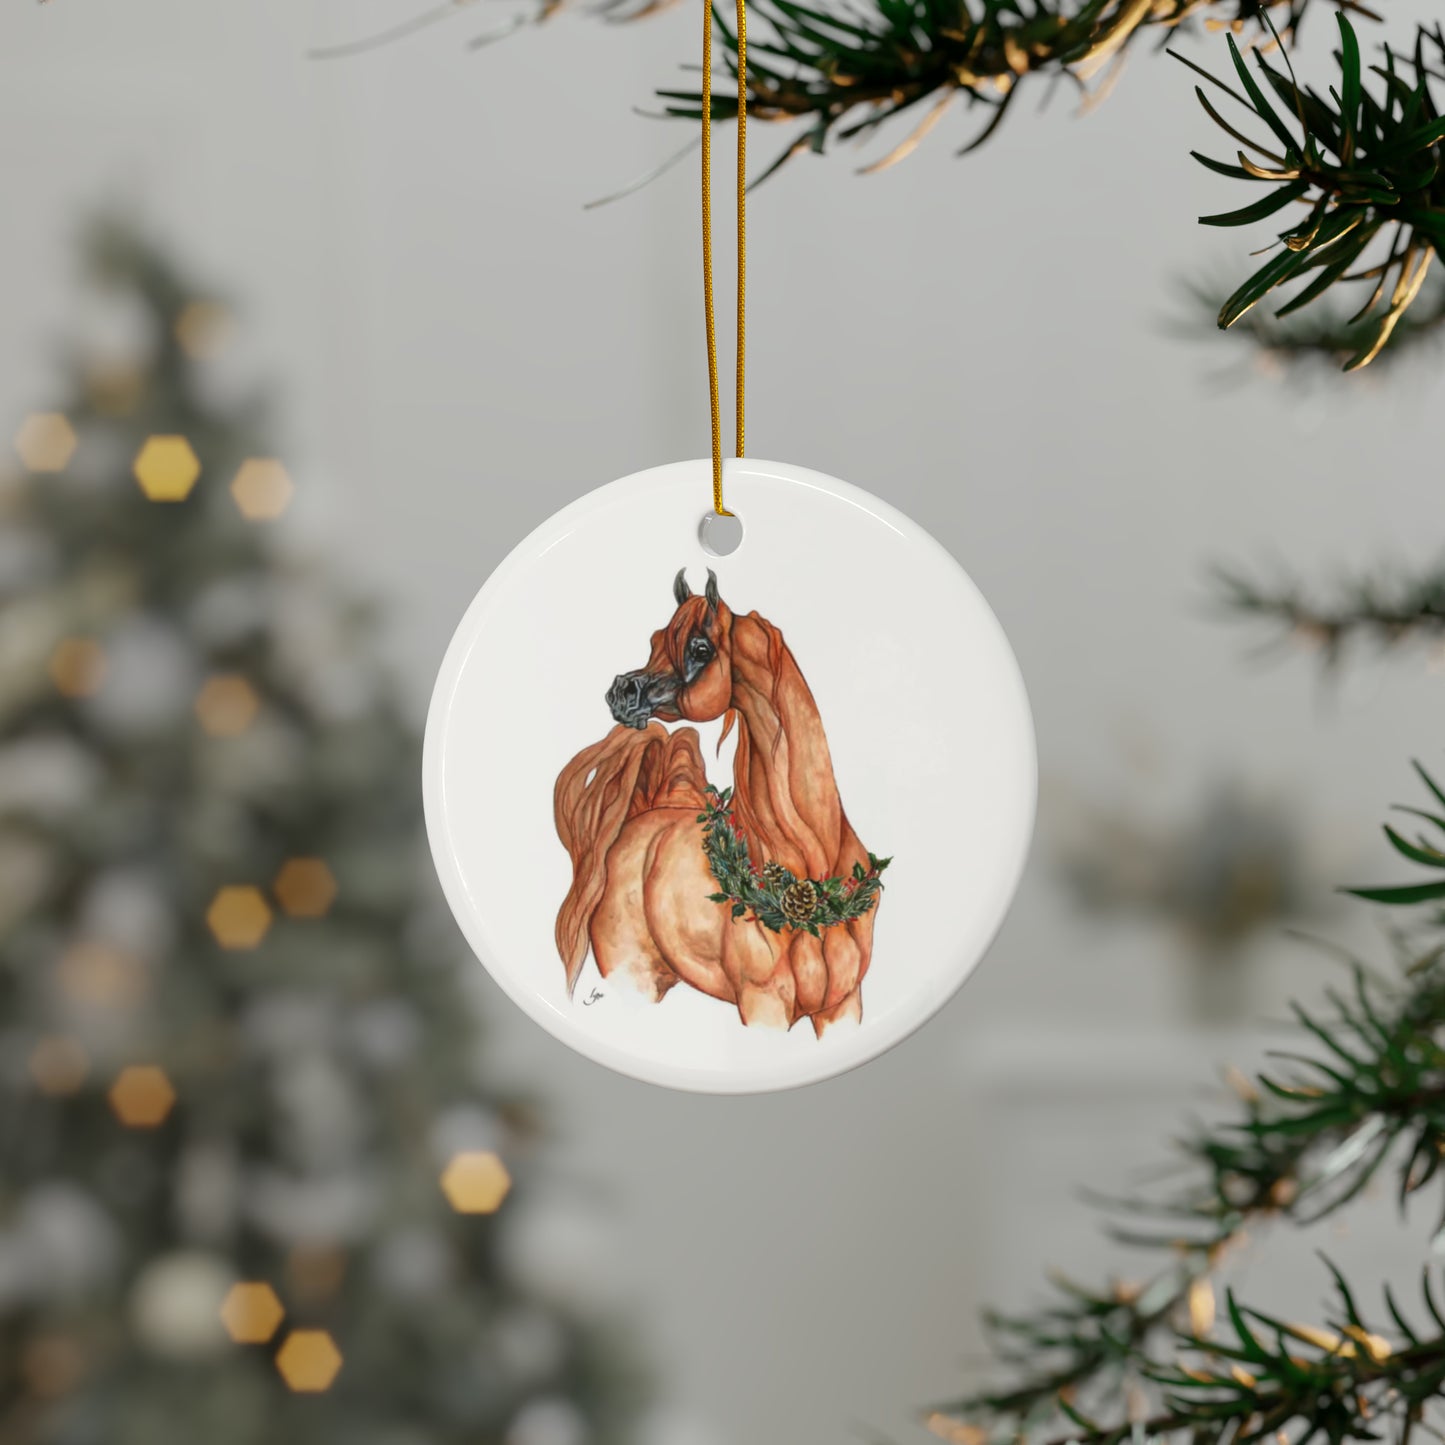 Limited Edition Arabian Horse World Holiday Ornament